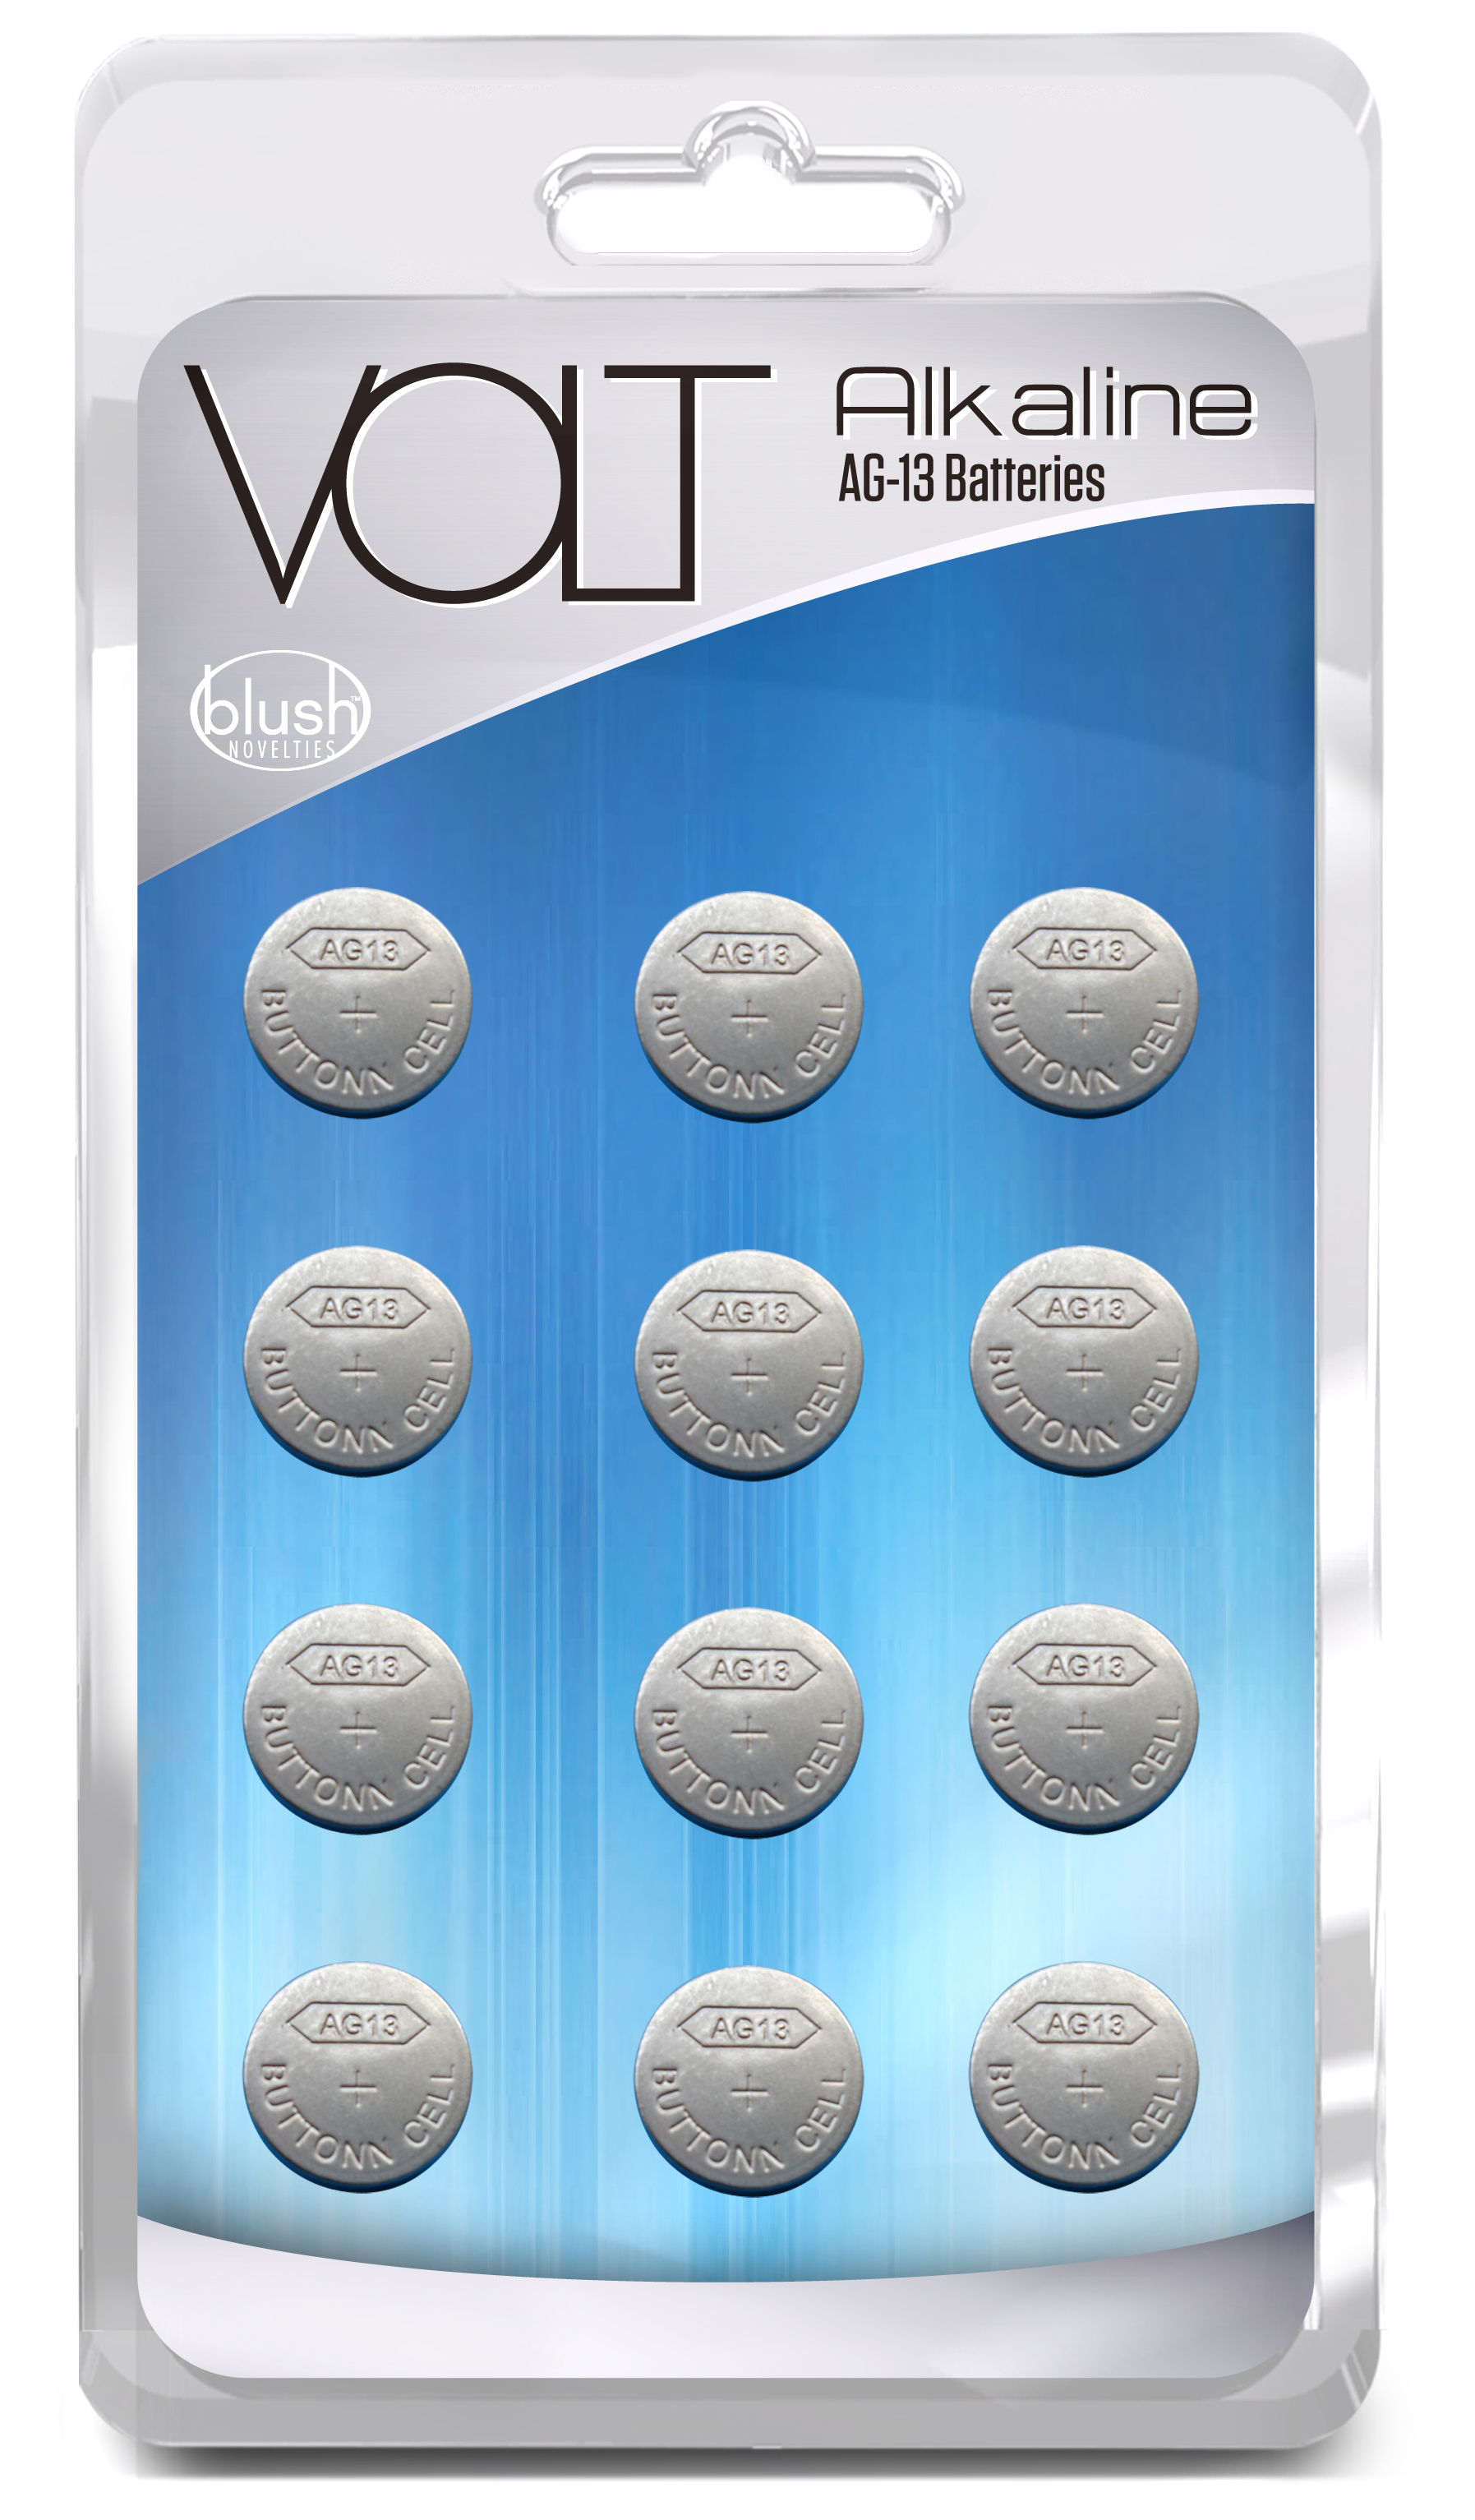 Volt Alkaline Batteries Ag-13 12 Pack - BN99112